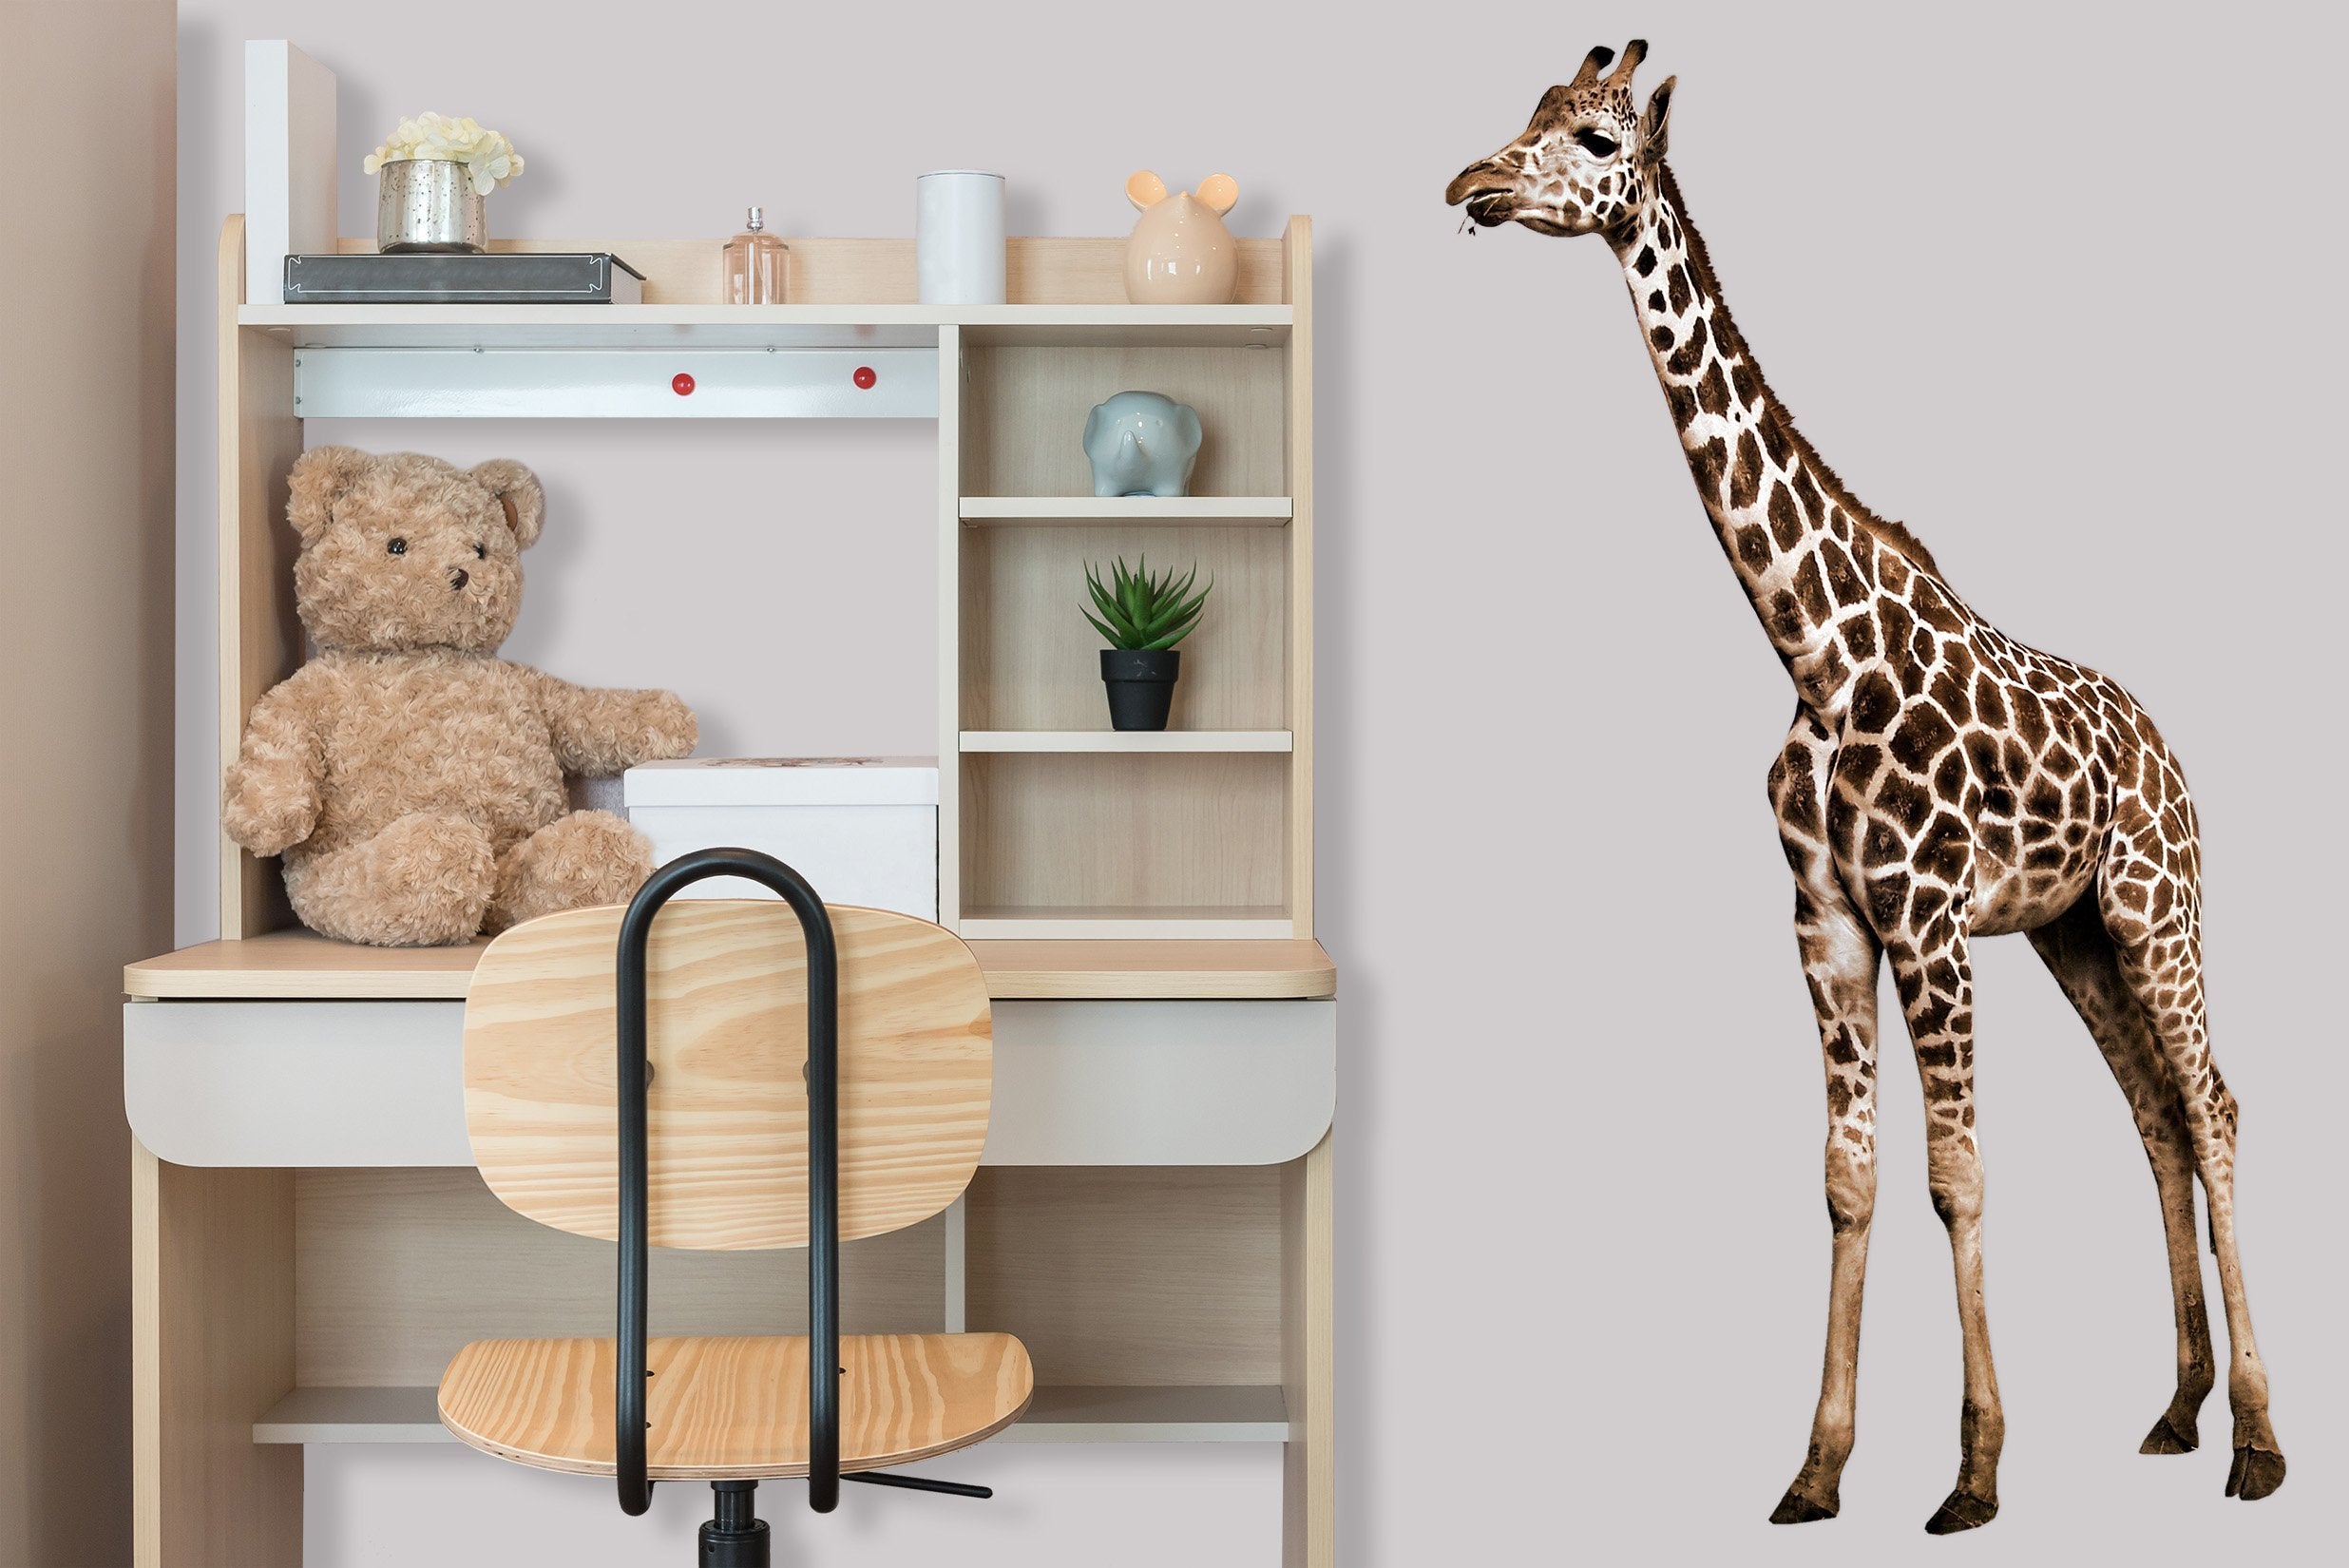 3D Giraffe's Legs 151 Animals Wall Stickers Wallpaper AJ Wallpaper 